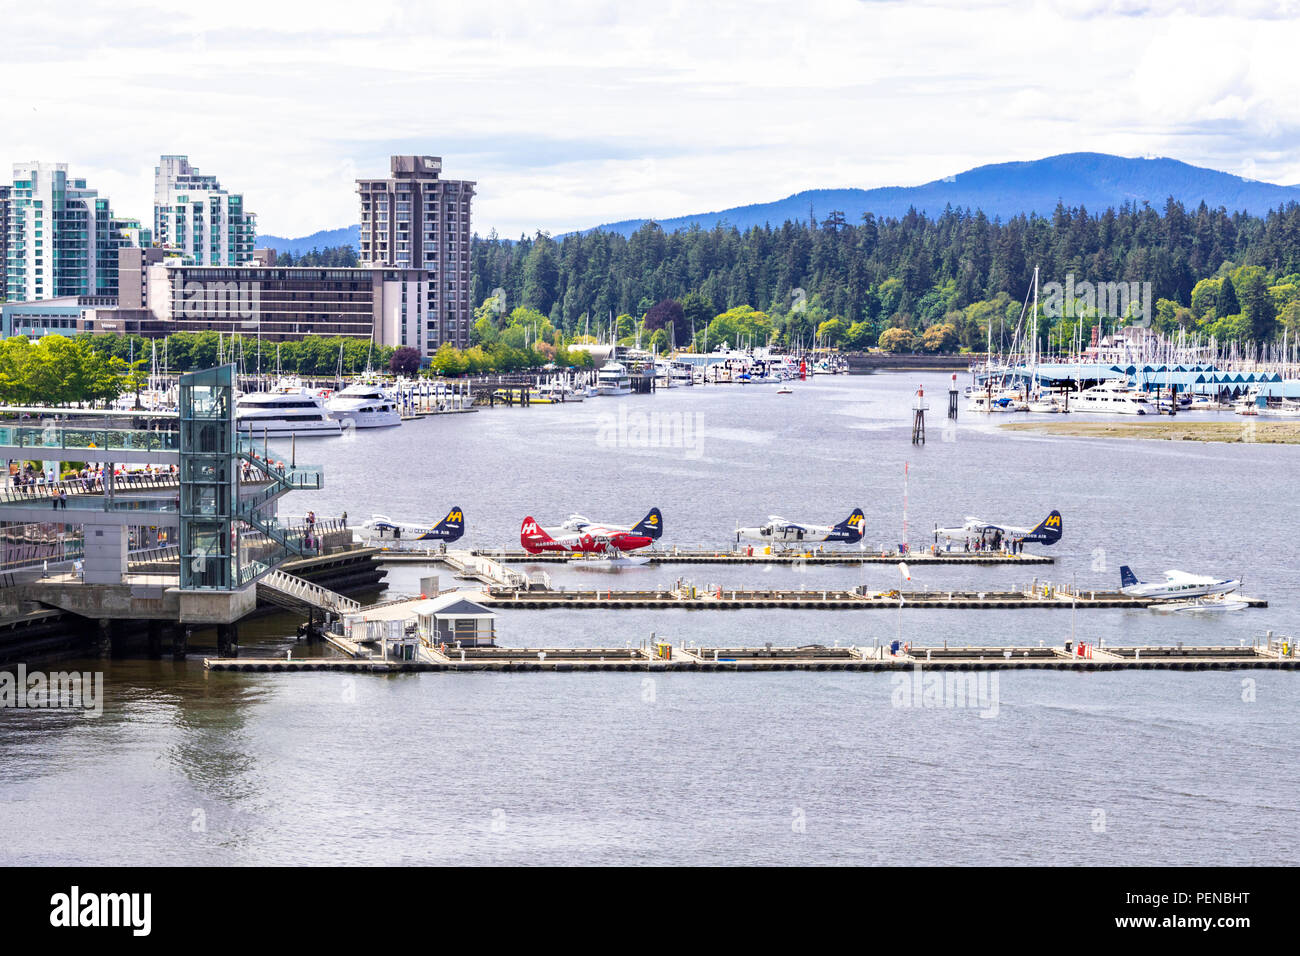 Seaplanes for tourist pleasure flights moored at Vancouver Harbour Flight Centre Seaplane Terminal, Vancouver, British Columbia, Canada Stock Photo